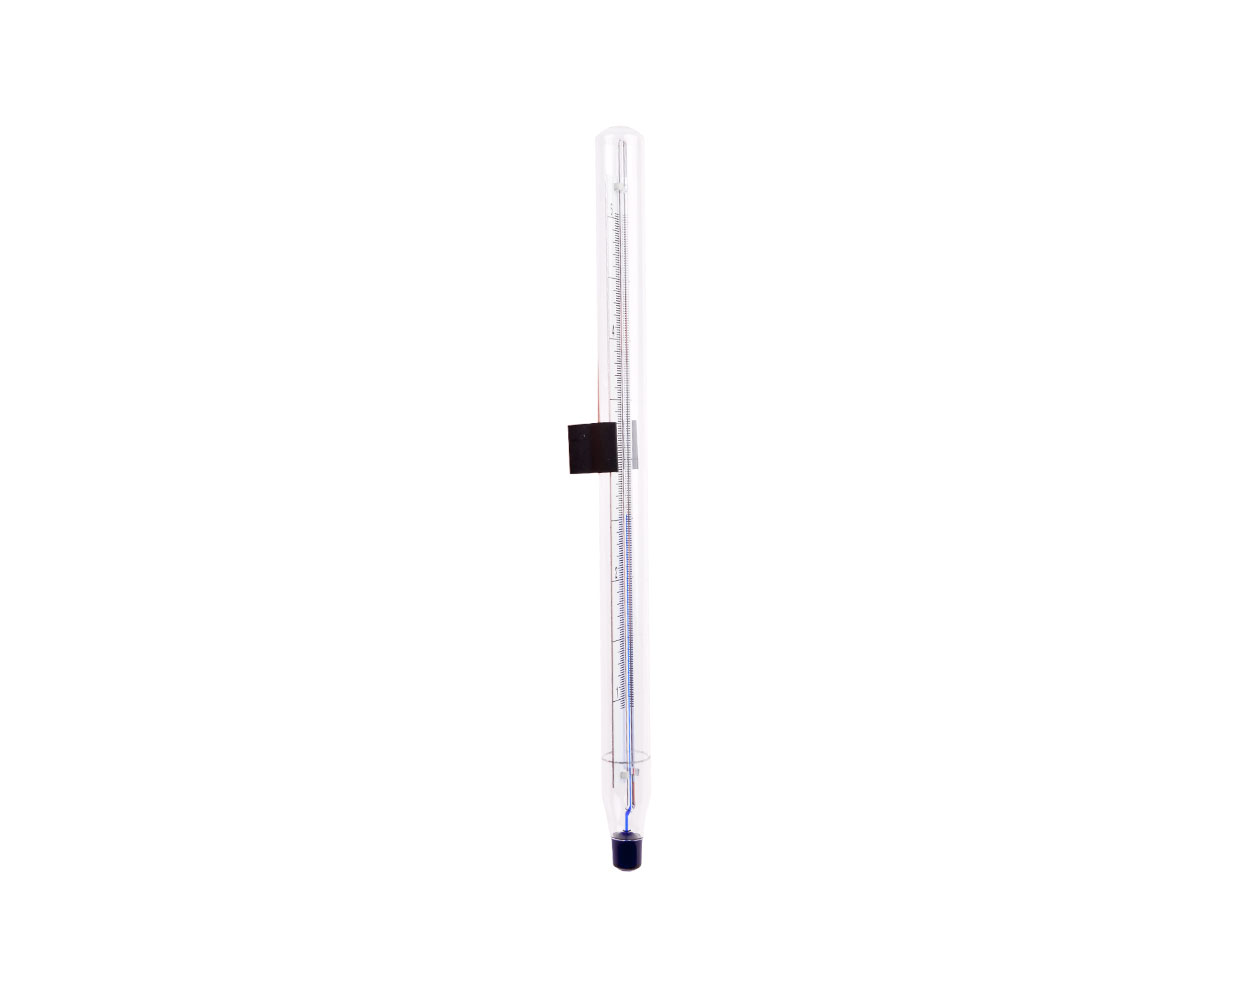 JOBO 3321 | JOBO Color Thermometer macodirect Thermometer | EN Darkroom | | | Accessories